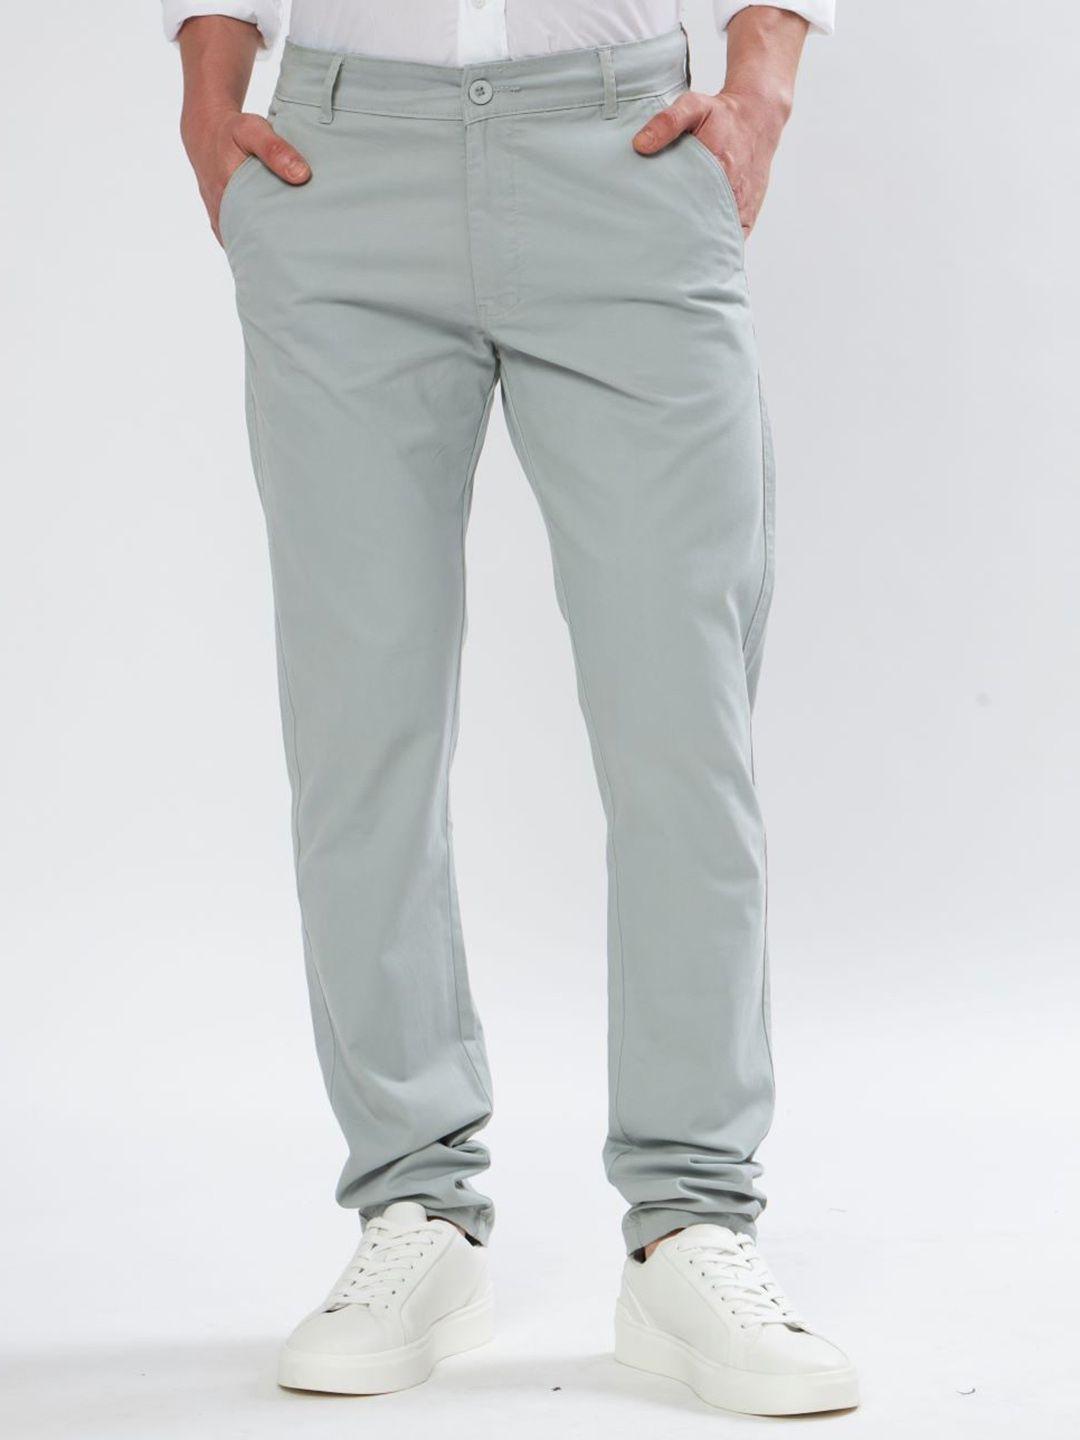 united-denim-men-relaxed-slim-fit-mid-rise-denim-trousers